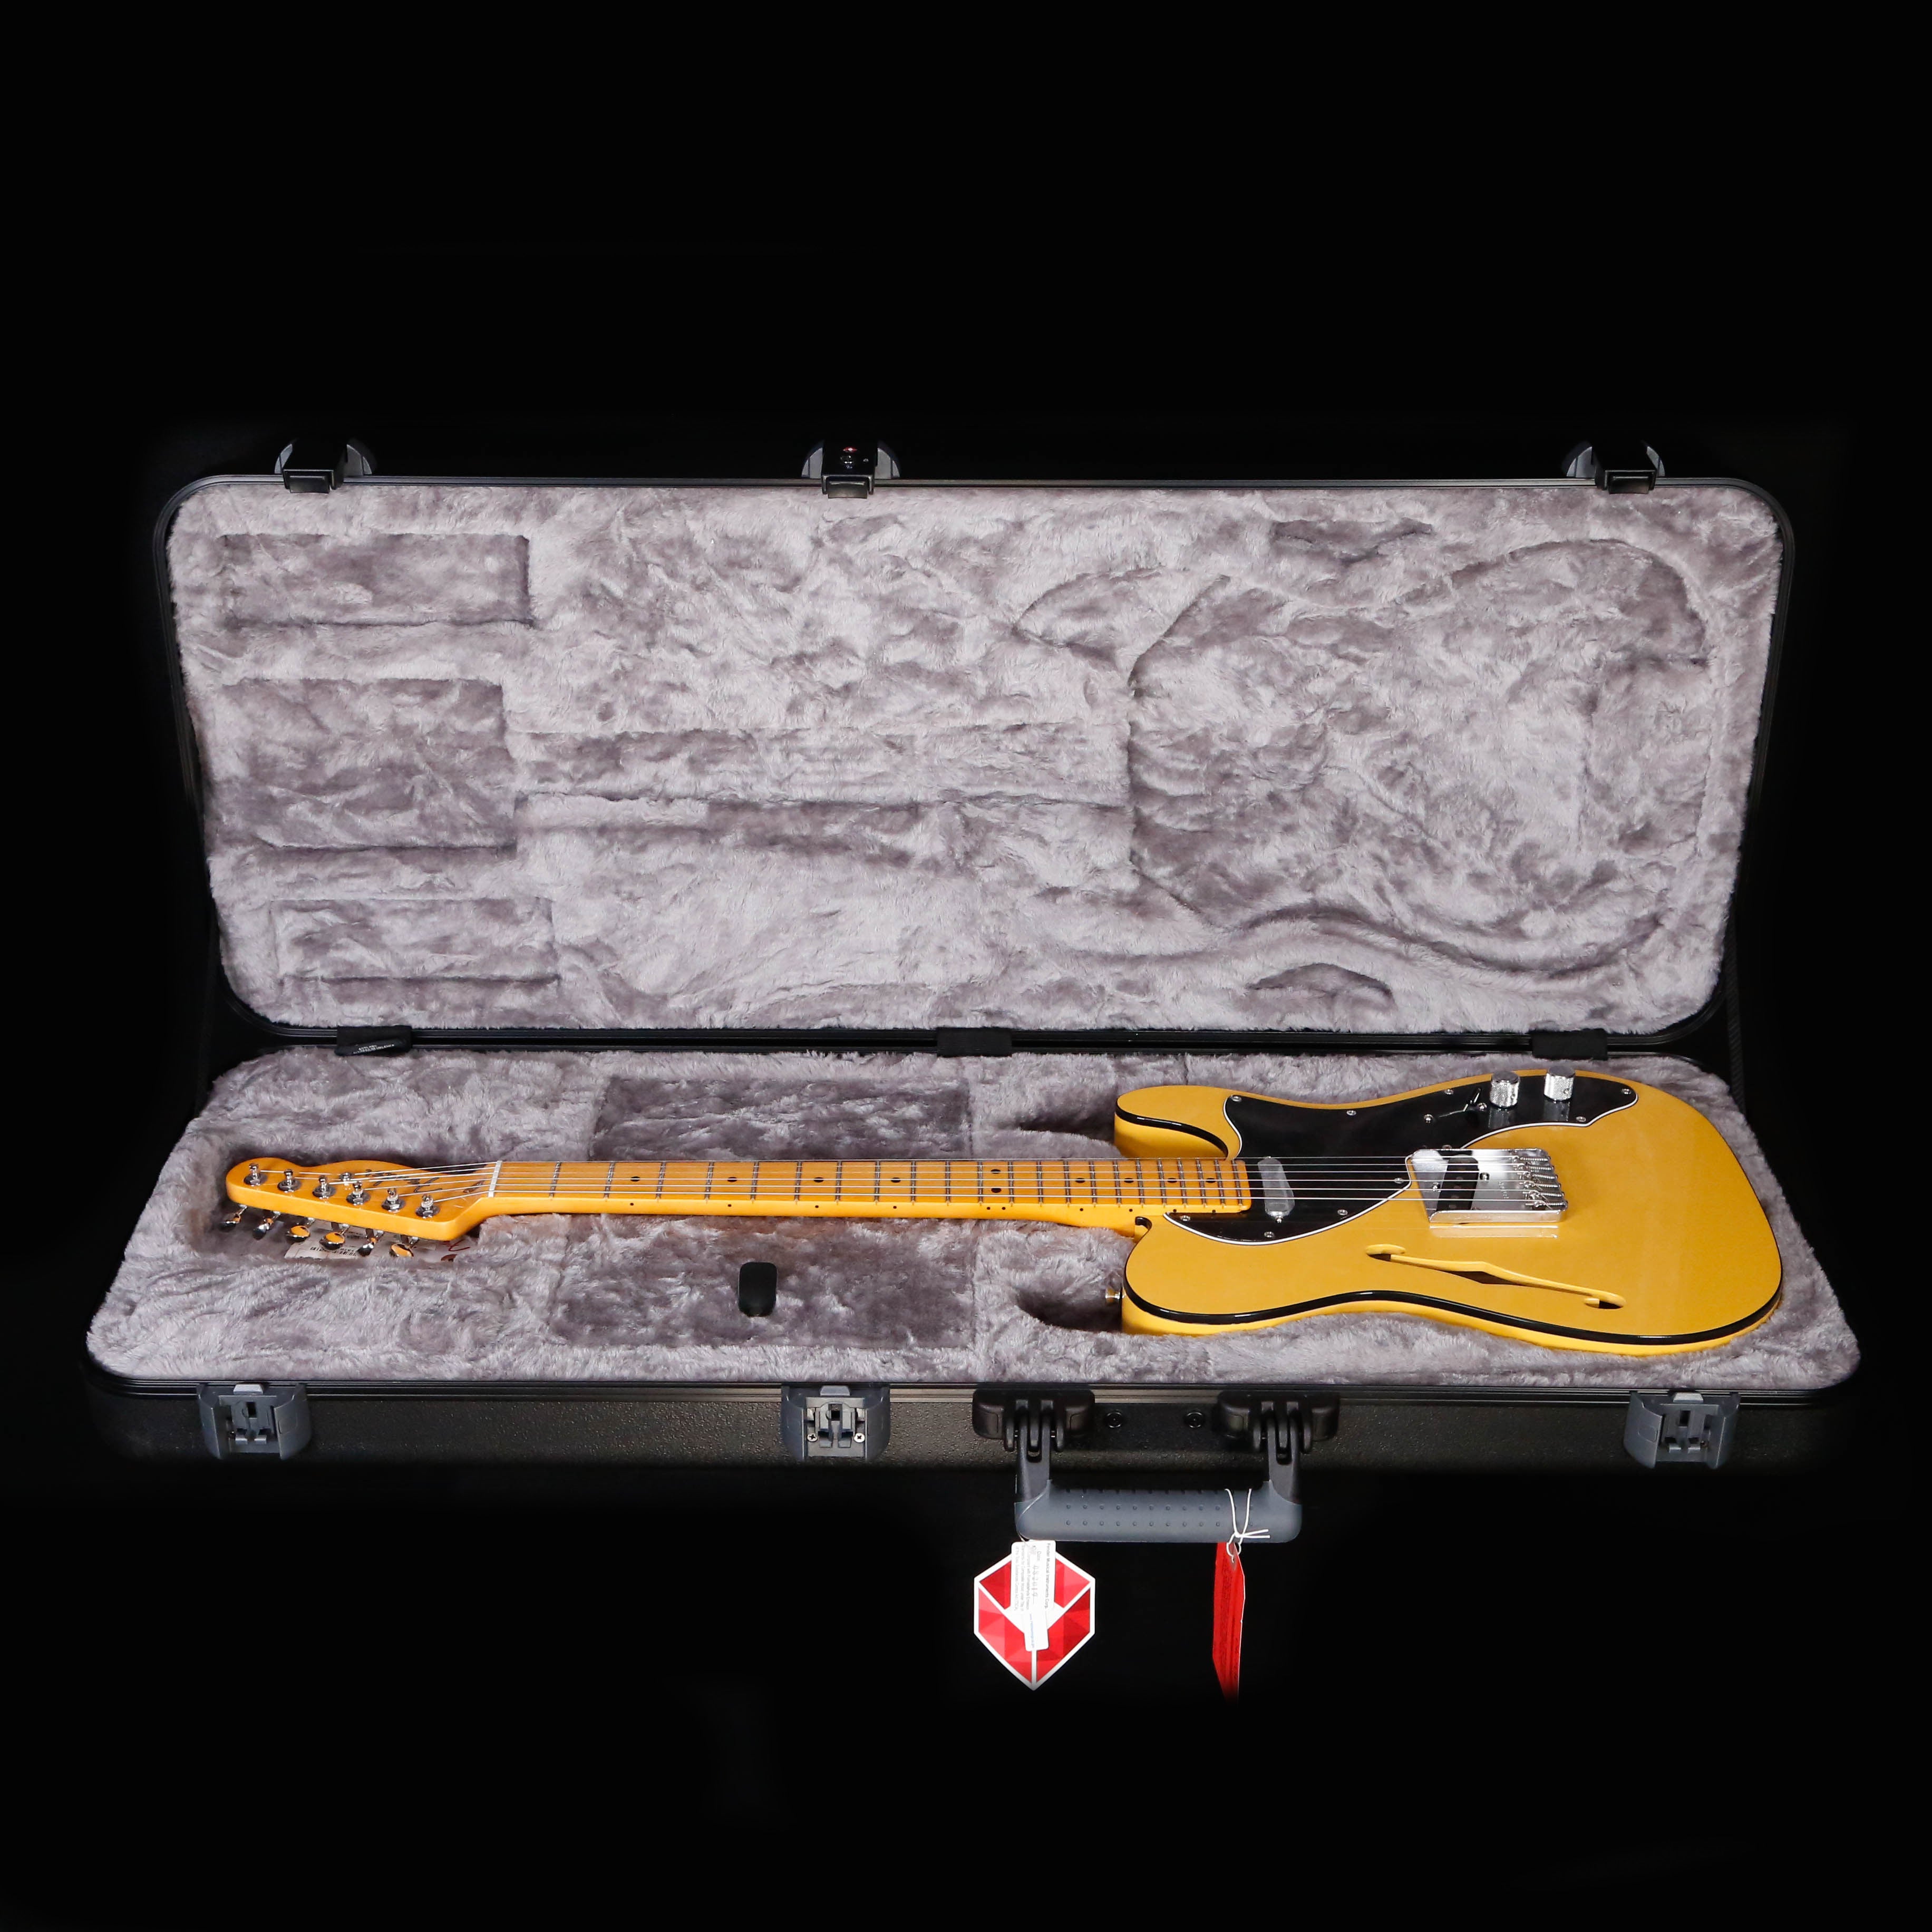 Fender Britt Daniel Telecaster Thinline, Amarillo Gold used